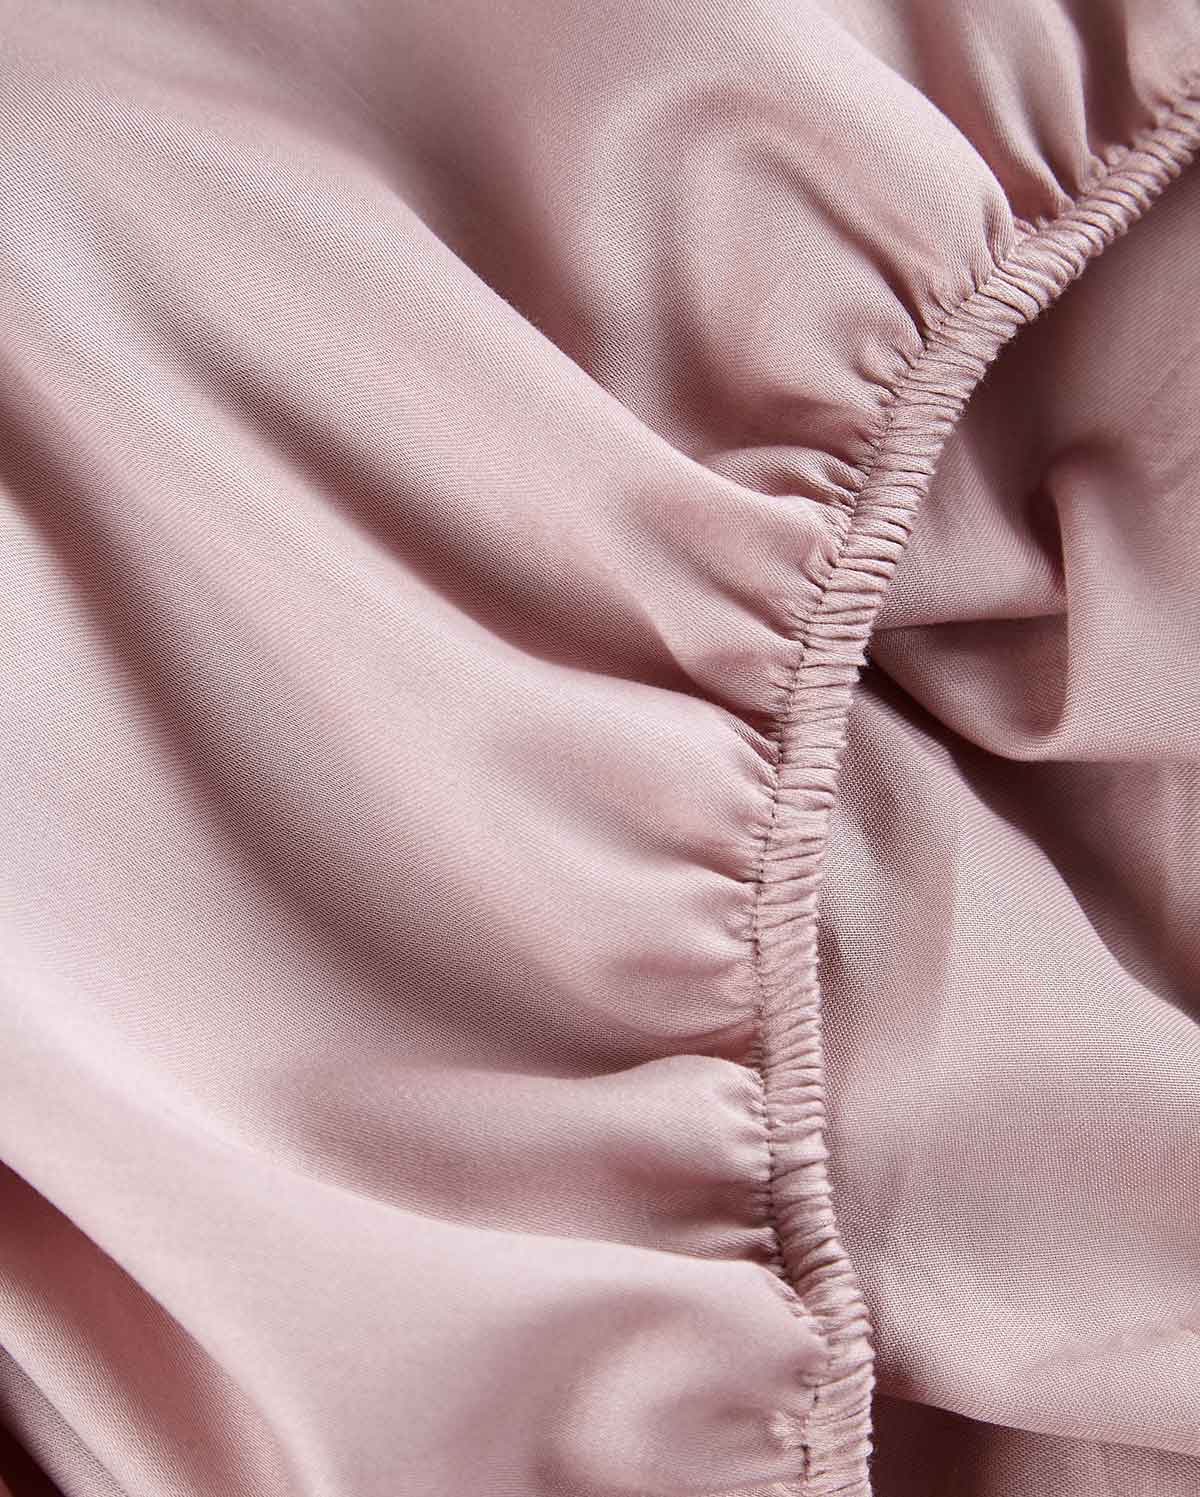 Lavish Sateen - Fitted Sheet Set - Nude Pink